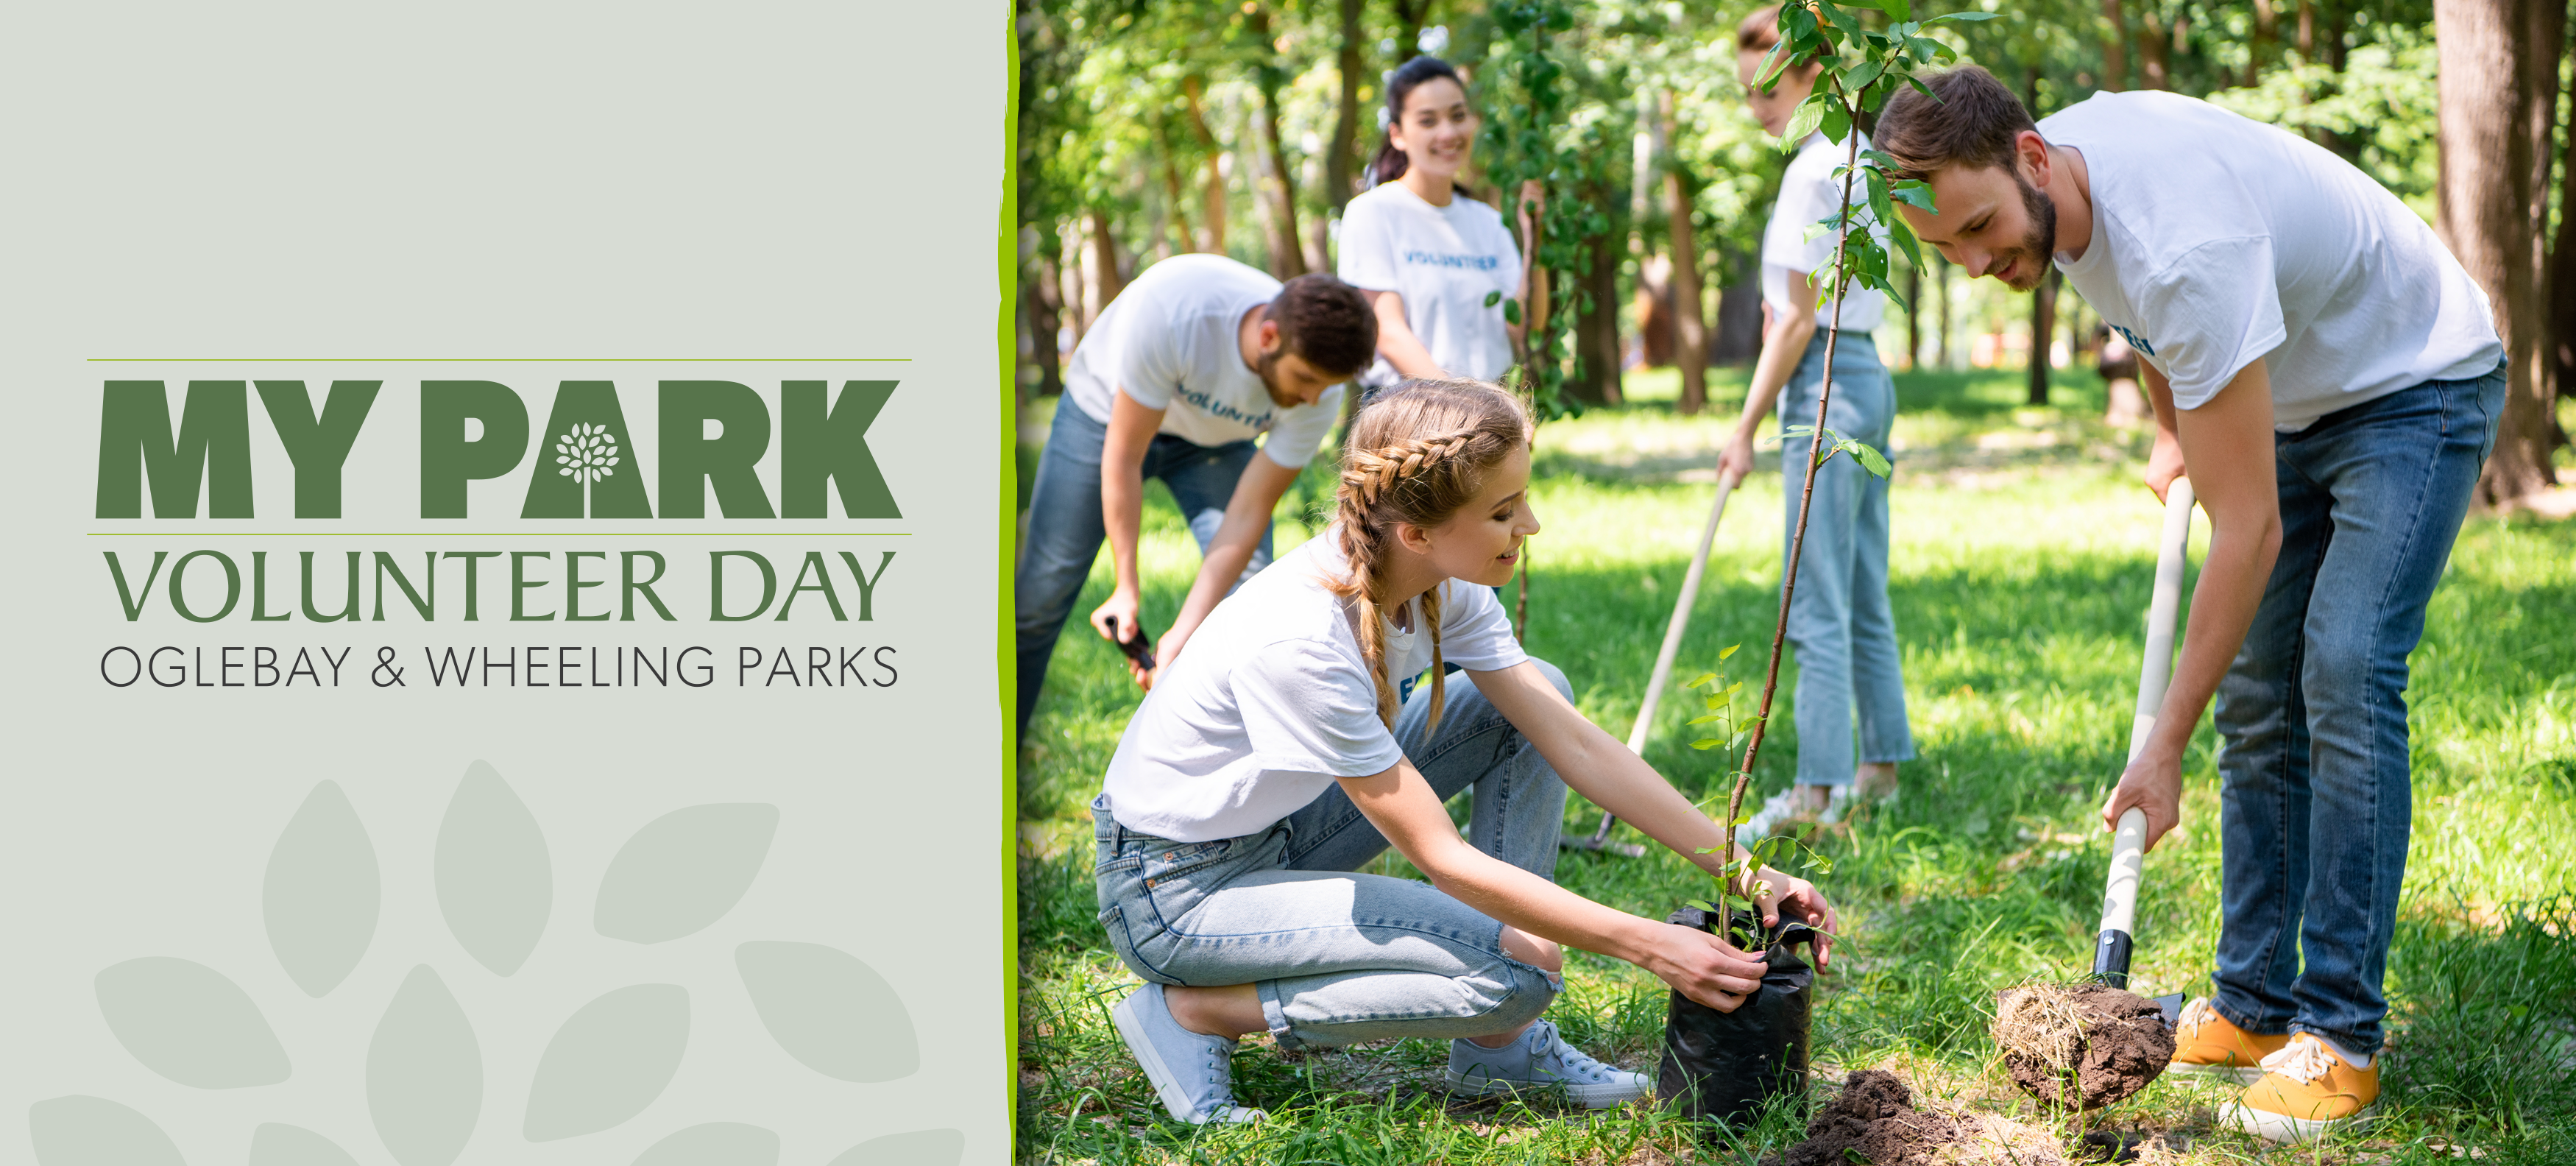 My Park Volunteer Day header photo